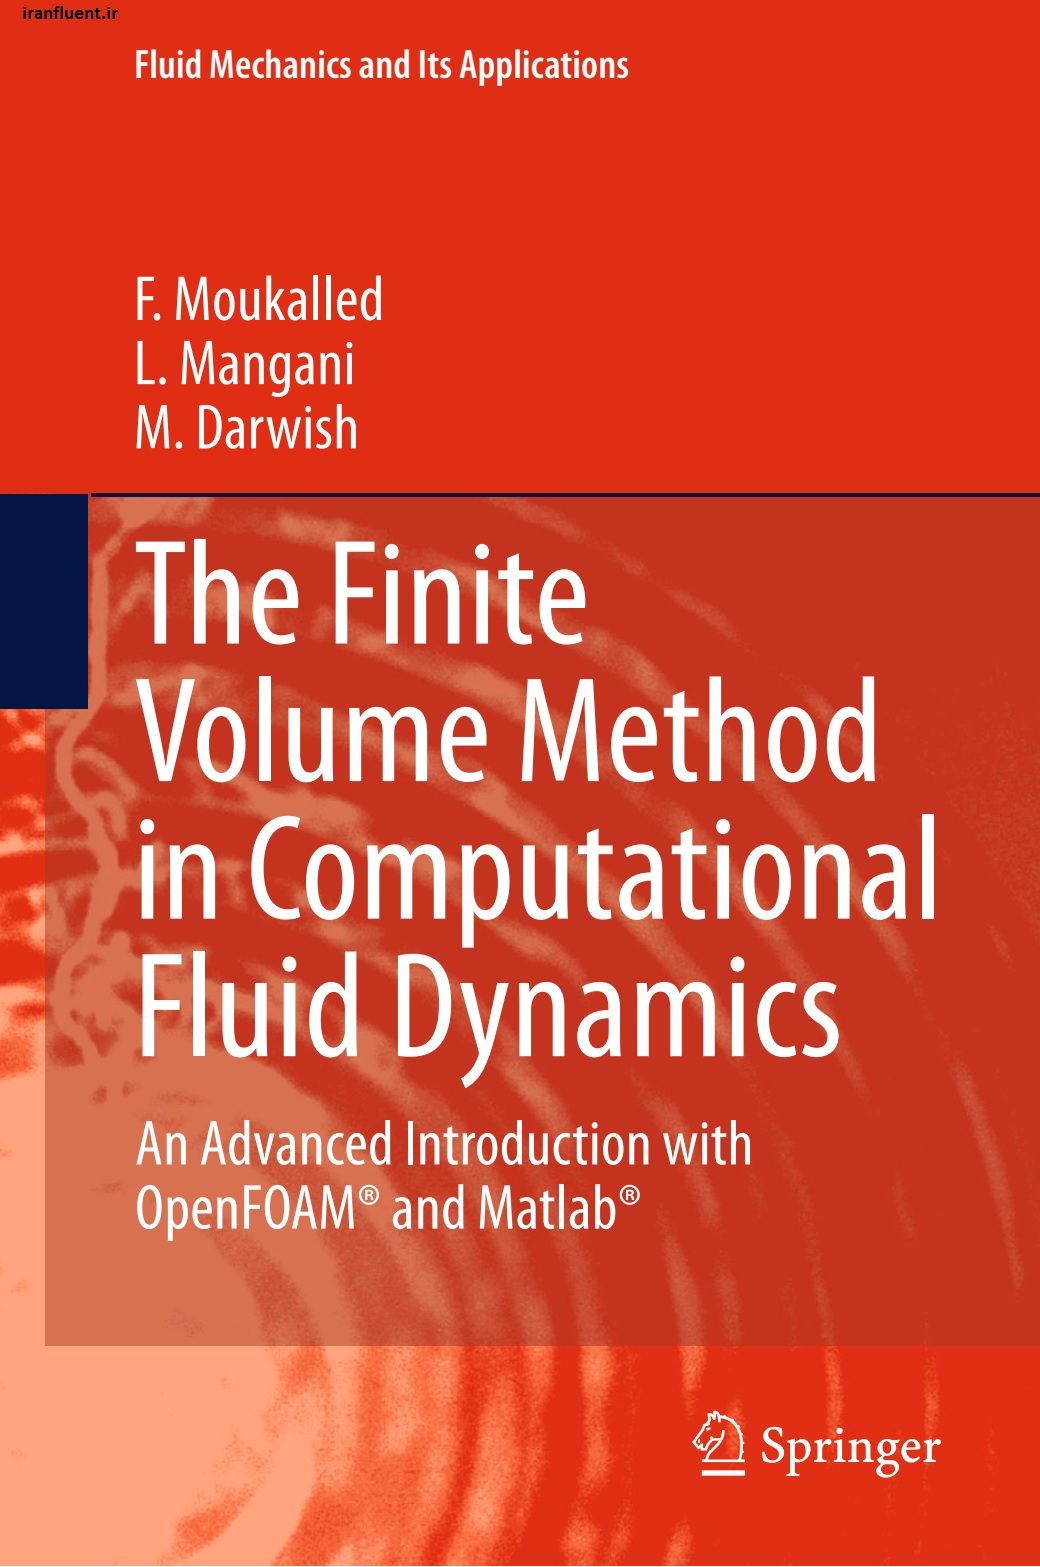 https://bayanbox.ir/view/969650829839925860/F.-Moukalled-L.-Mangani-M.-Darwish-auth.-The-Finite-Volume-Method-in-Computational-Fluid-Dynamics-An-Advanced-Introduction-with-OpenFOAM-and-Matlab-iranfluent.ir.jpg